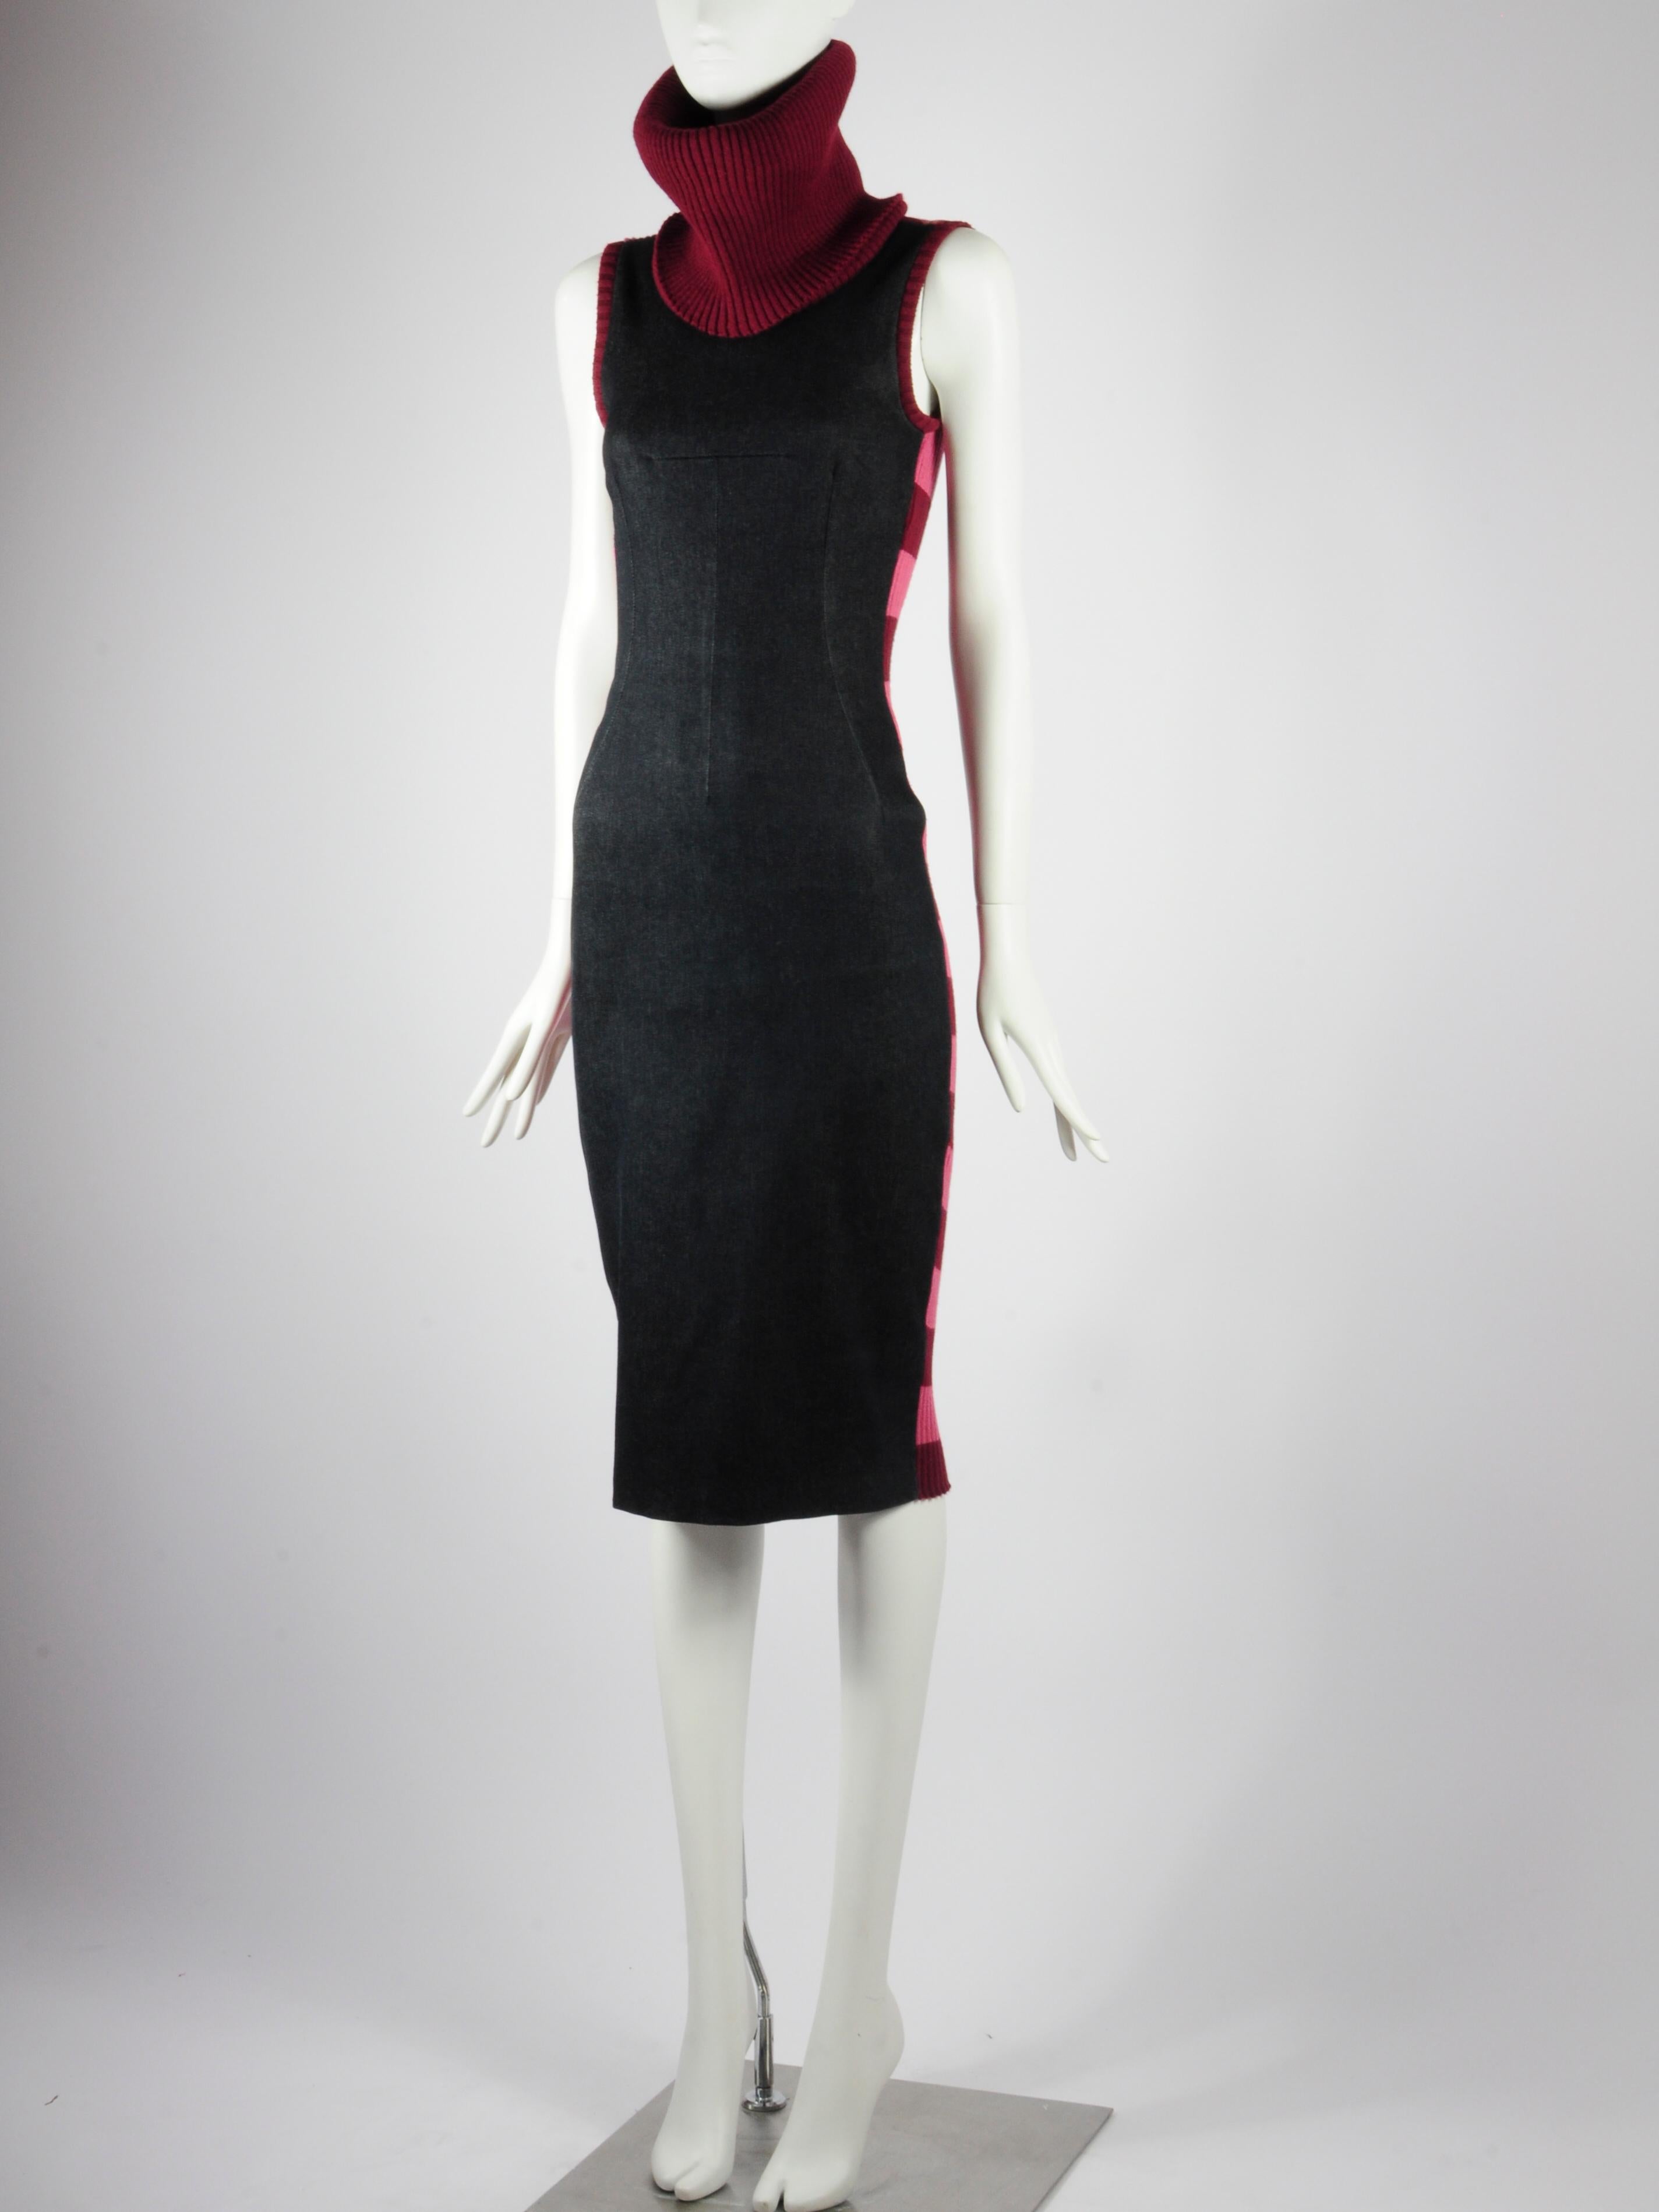 D&G Dolce & Gabbana Denim and Knitwear Dress Striped Turtleneck Sleeveless 1990s For Sale 3